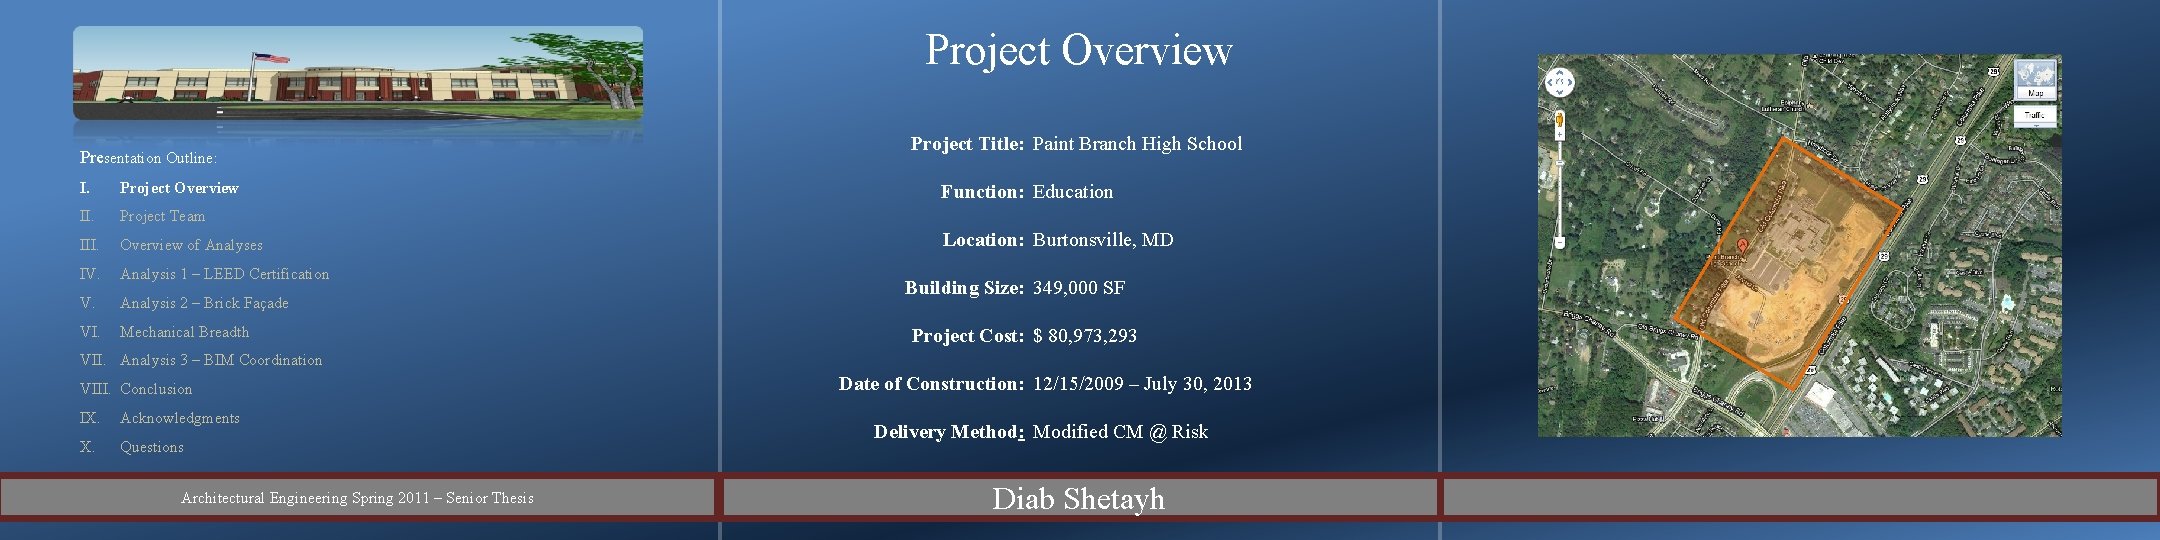 Project Overview Presentation Outline: I. Project Overview II. Project Team III. Overview of Analyses